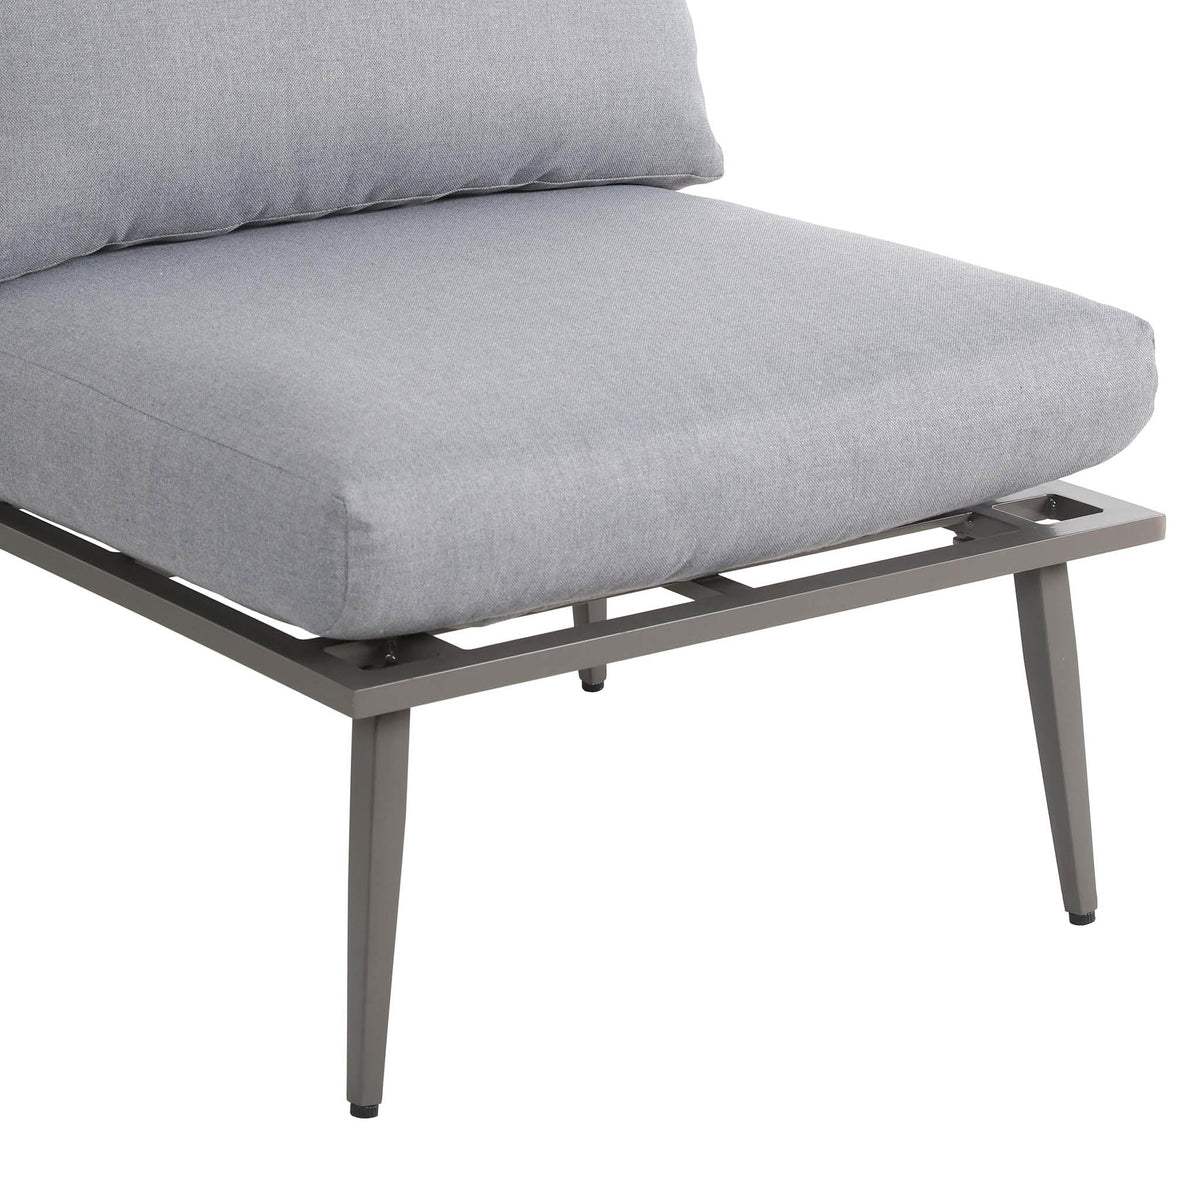 Mayfair 120cm Grey Outdoor Corner Fire Pit Table Lounge Set close up of aluminium legs